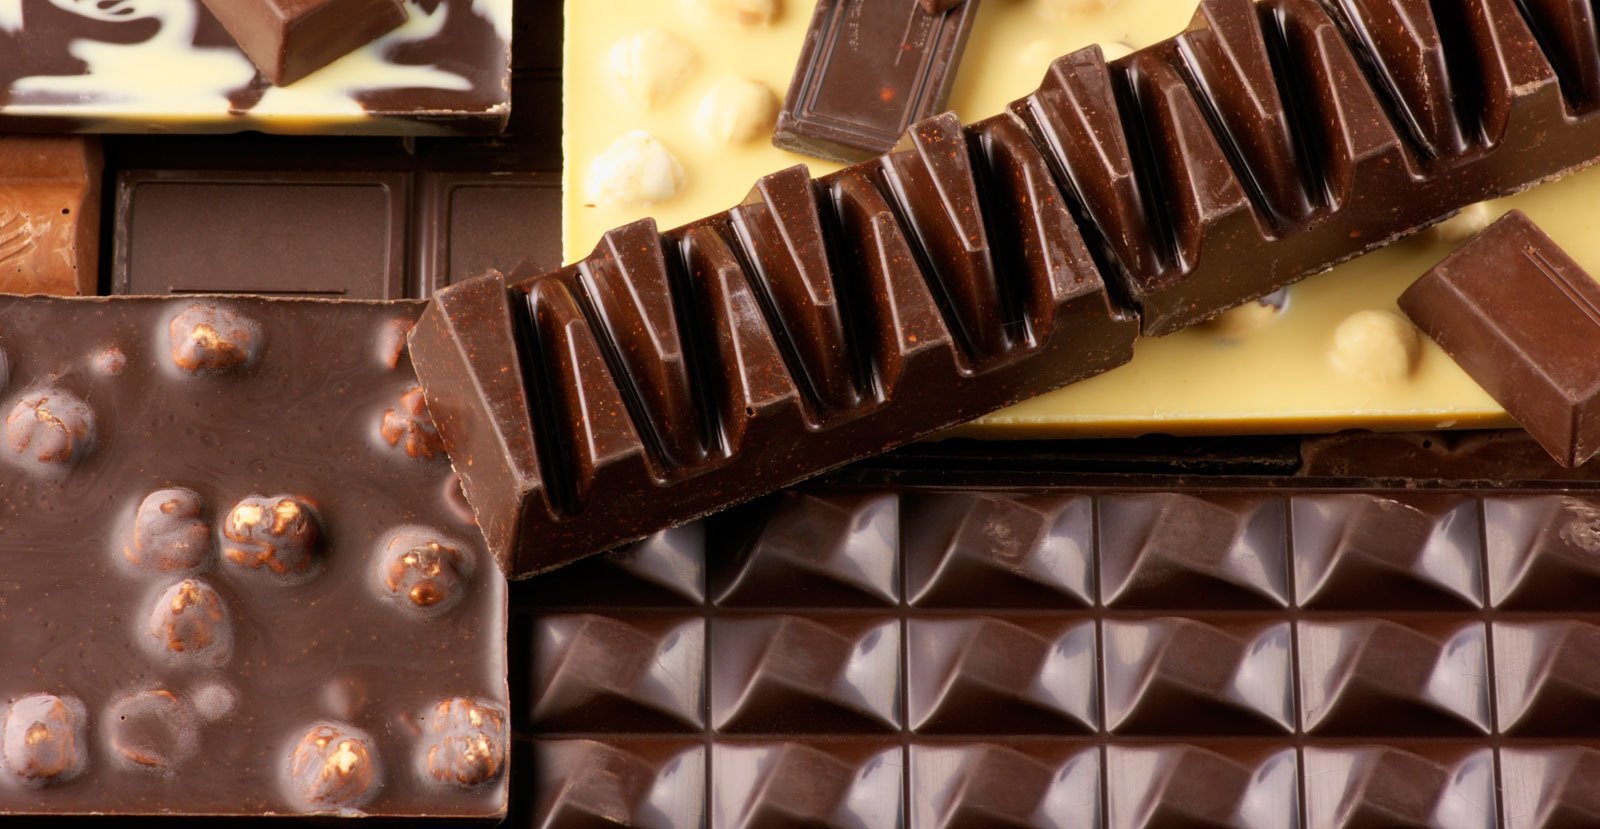 Покажи картинку шоколада. Сорта шоколада. Виды шоколада фото. Шоколад Эстетика. День шоколада.